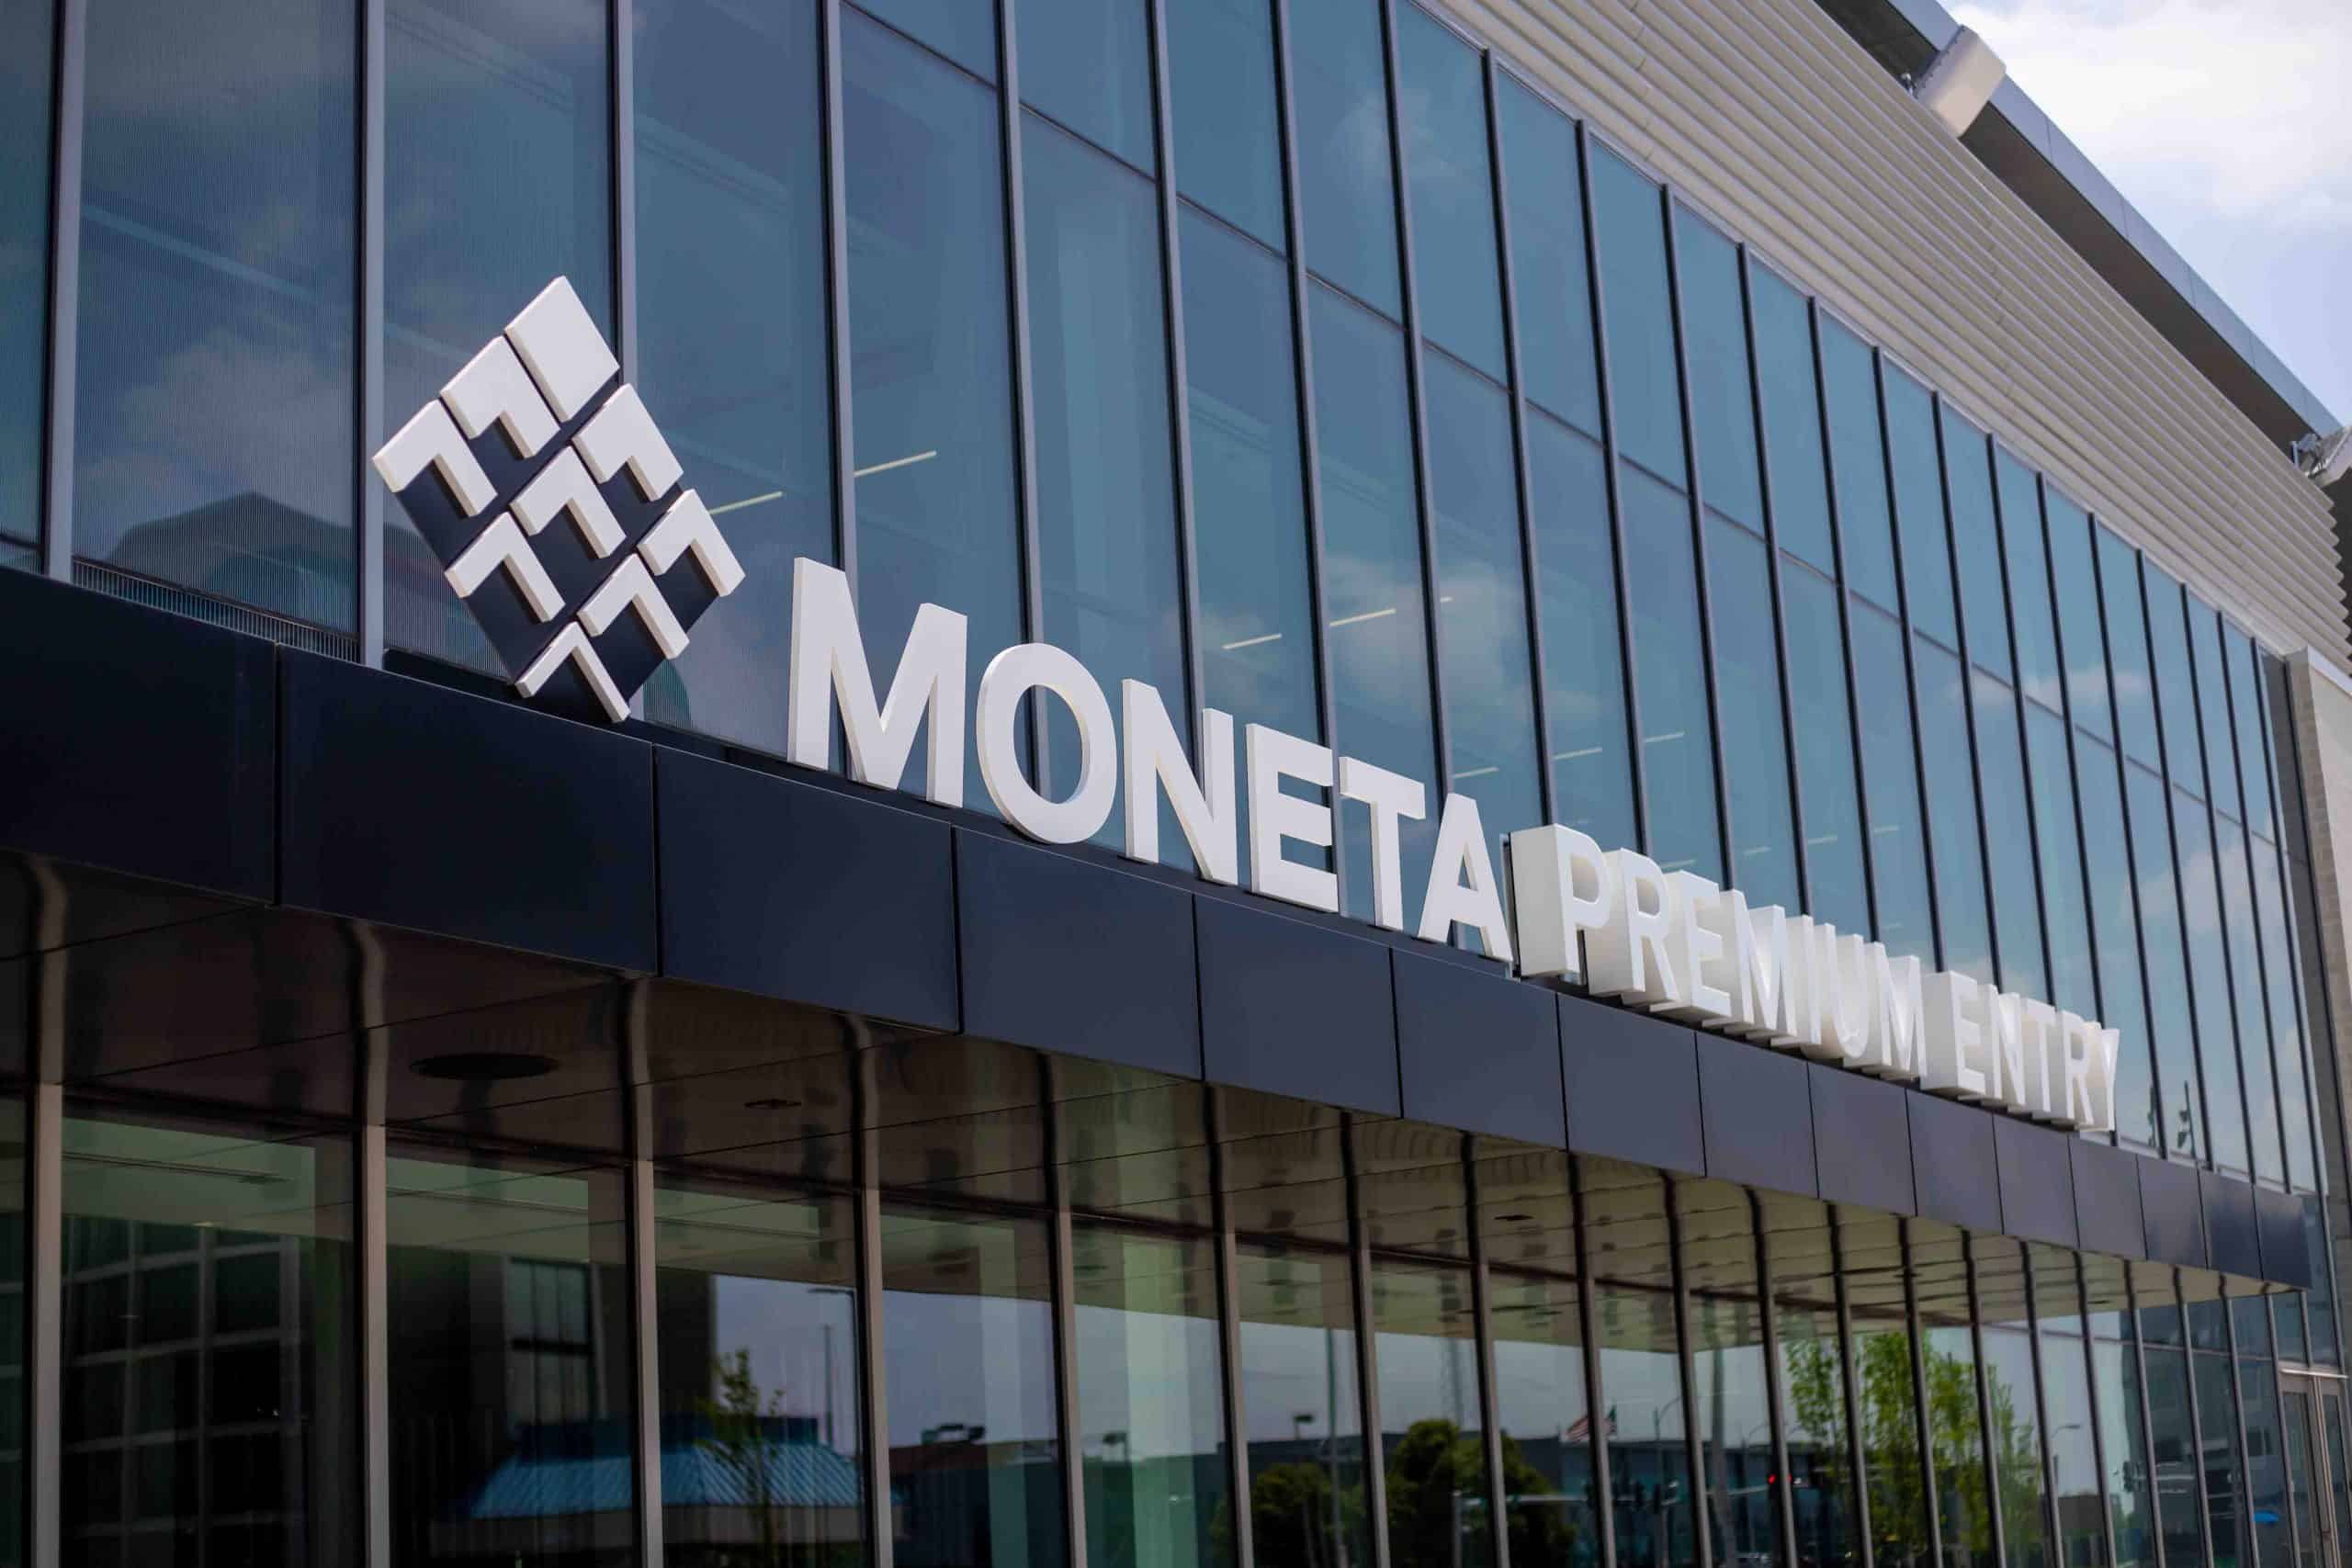 Custom Moneta Entrance sign for MLS stadium in dimensional letterset on rooftop